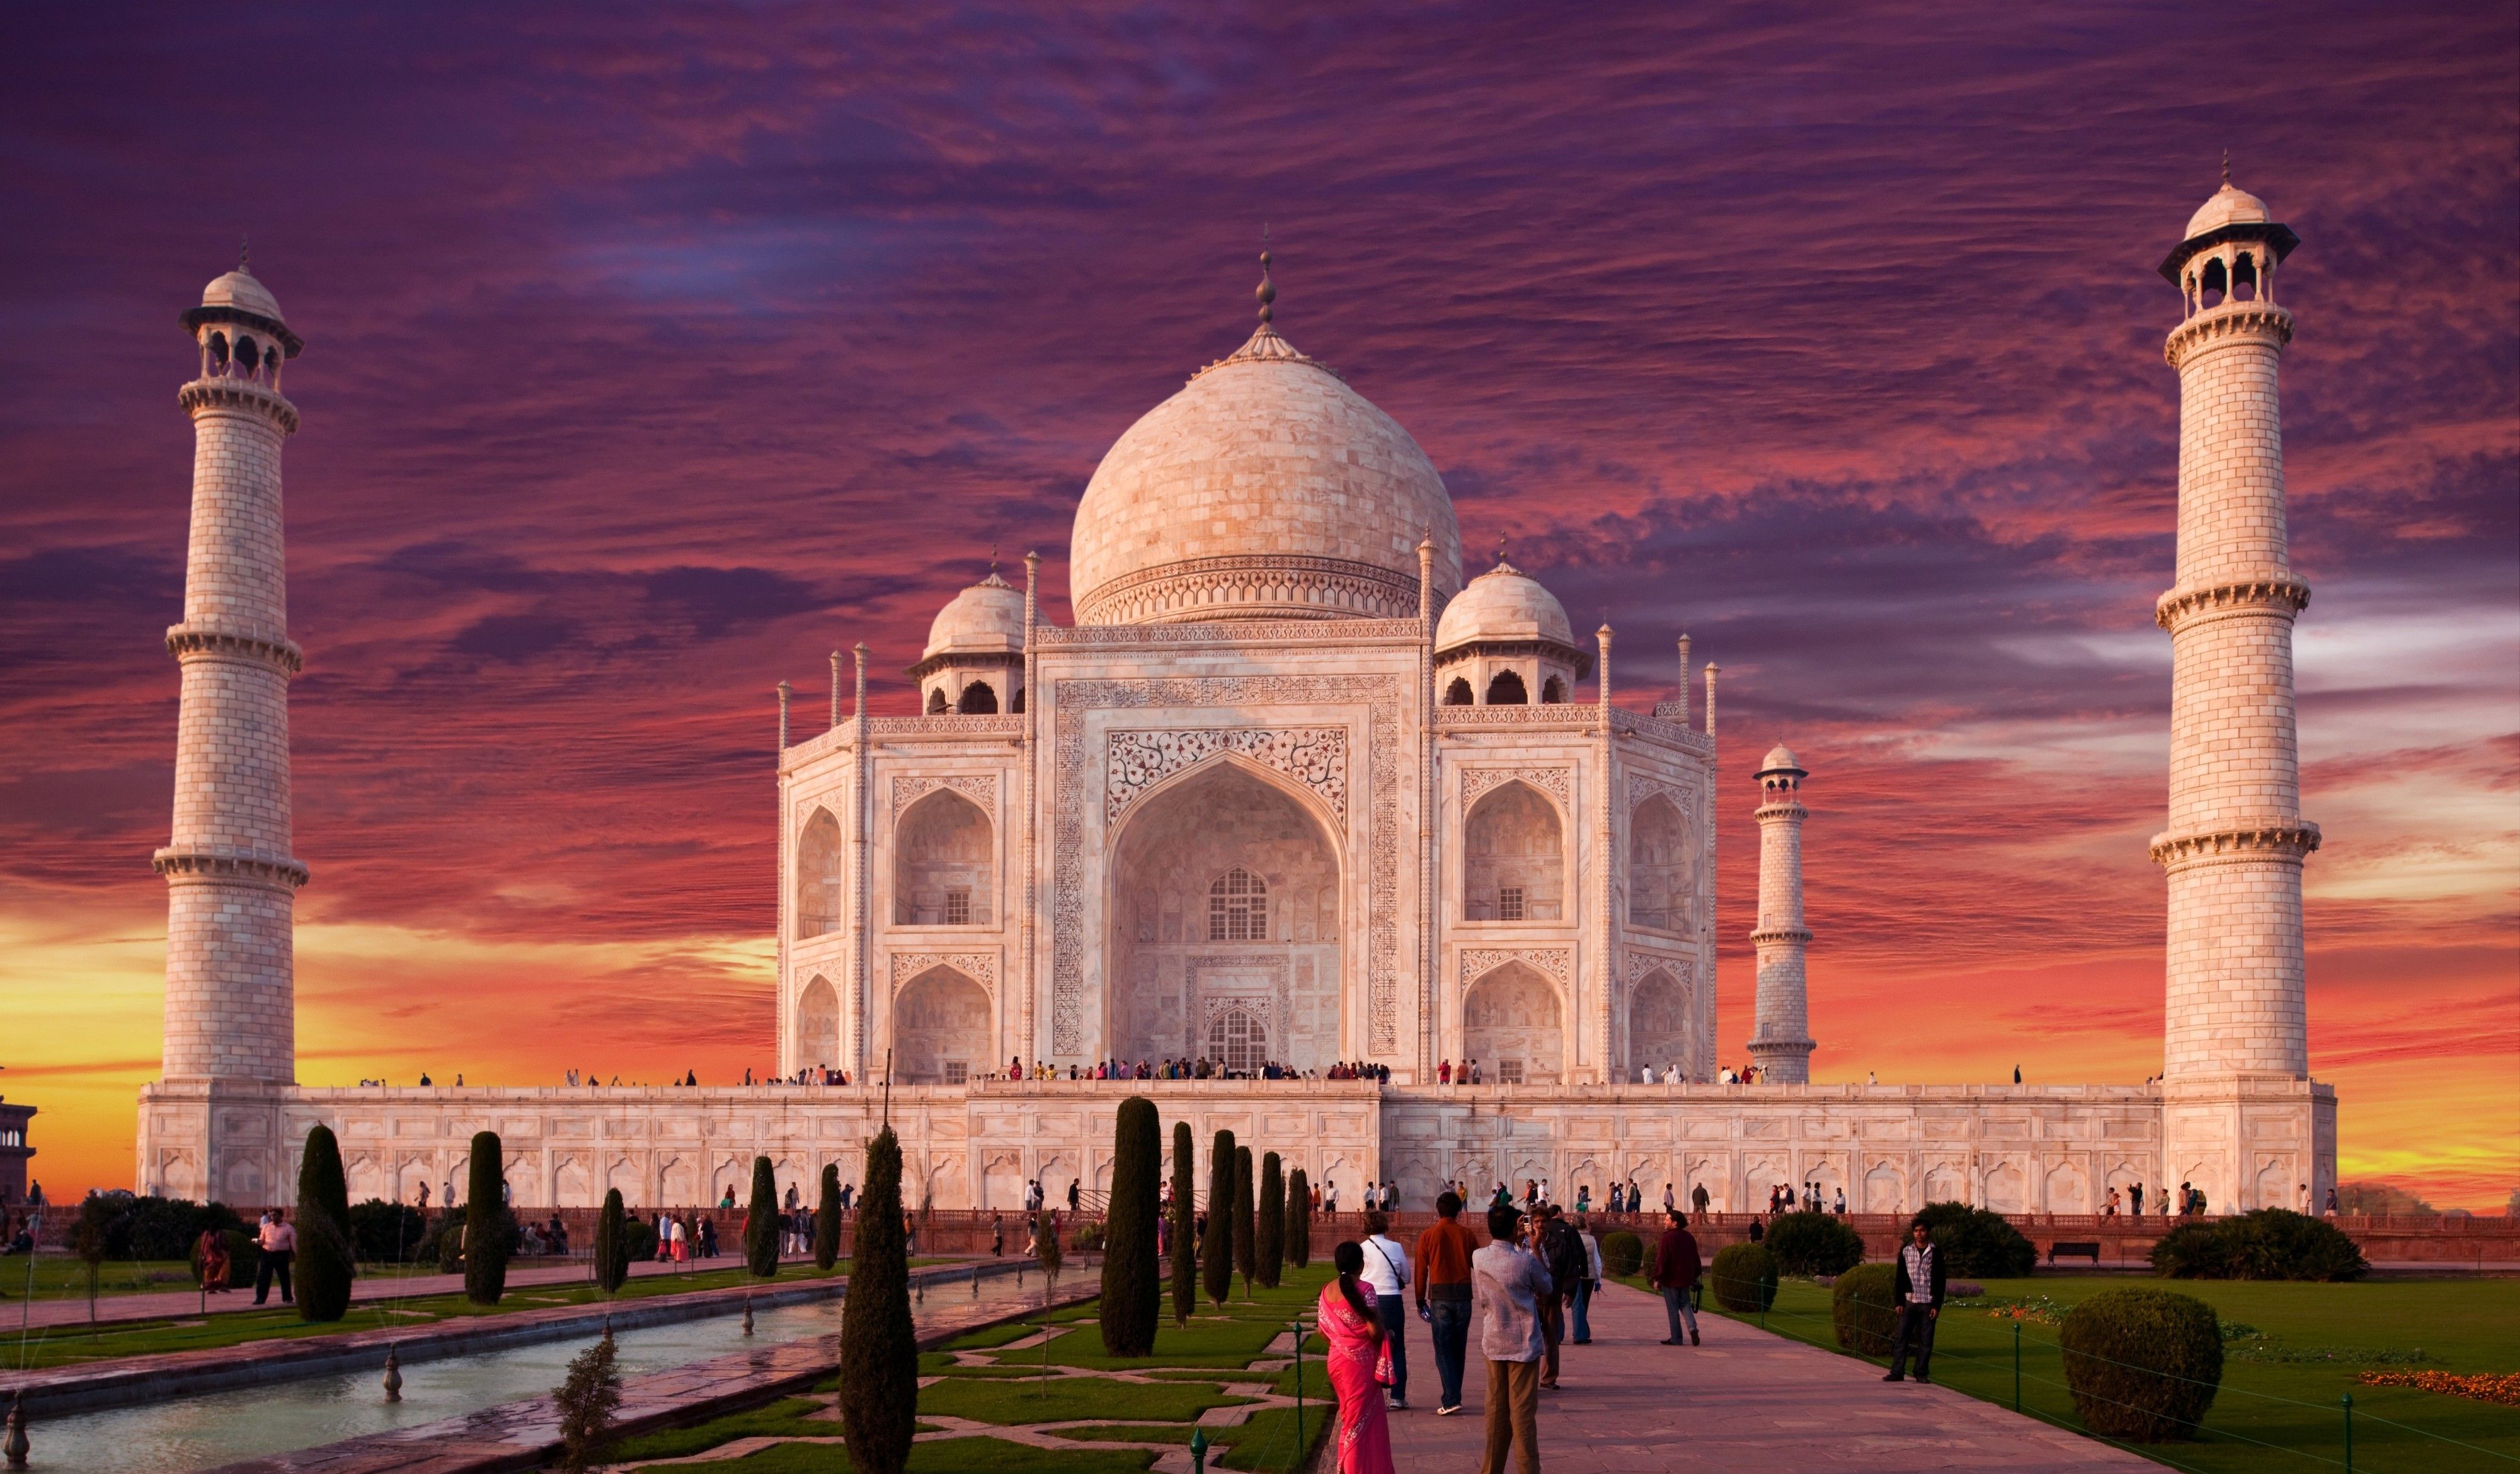 Taj Mahal 4k Ultra HD Wallpaper and Background Imagex2340